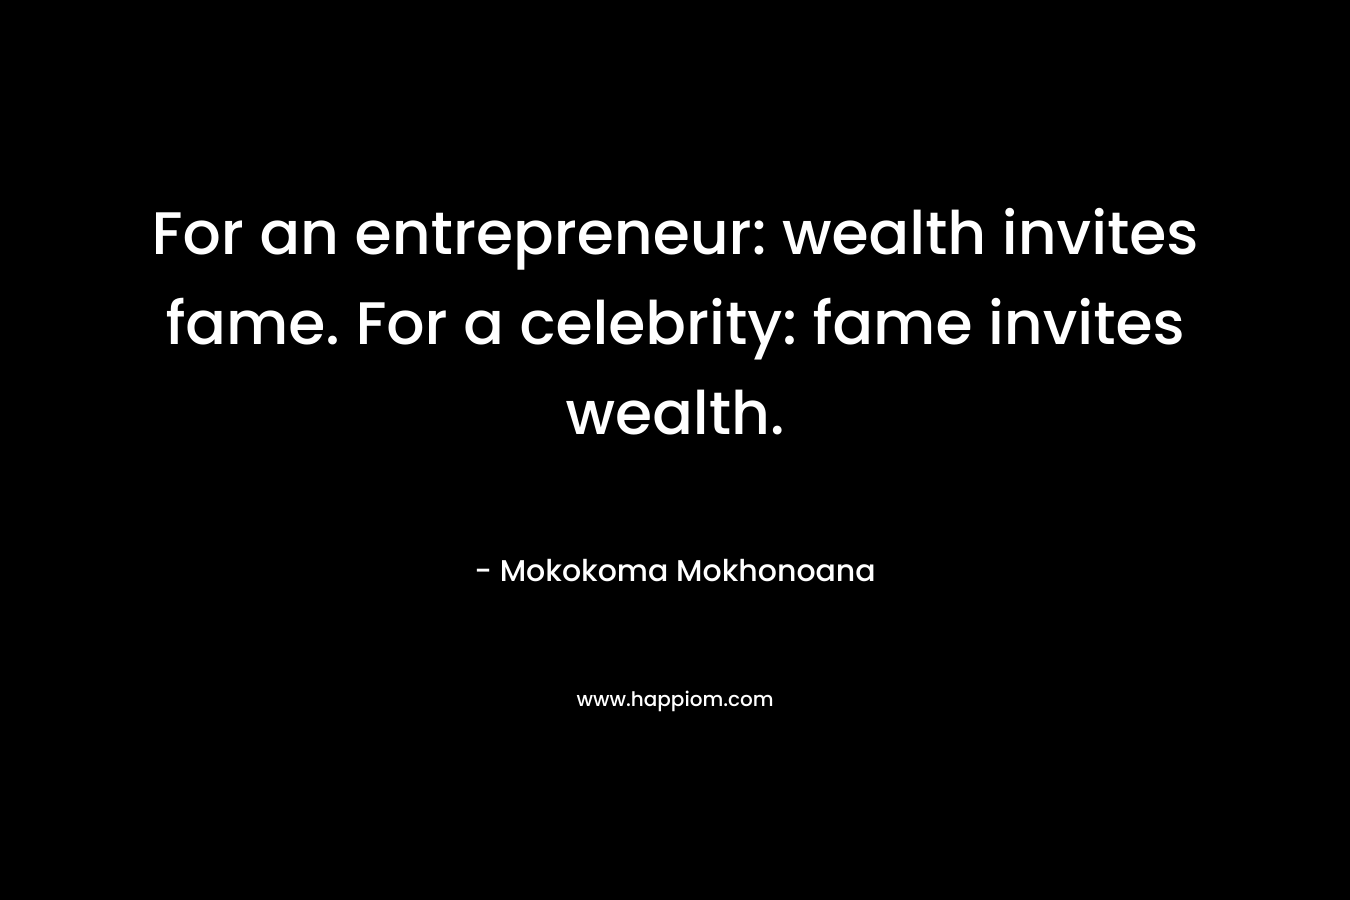 For an entrepreneur: wealth invites fame. For a celebrity: fame invites wealth.